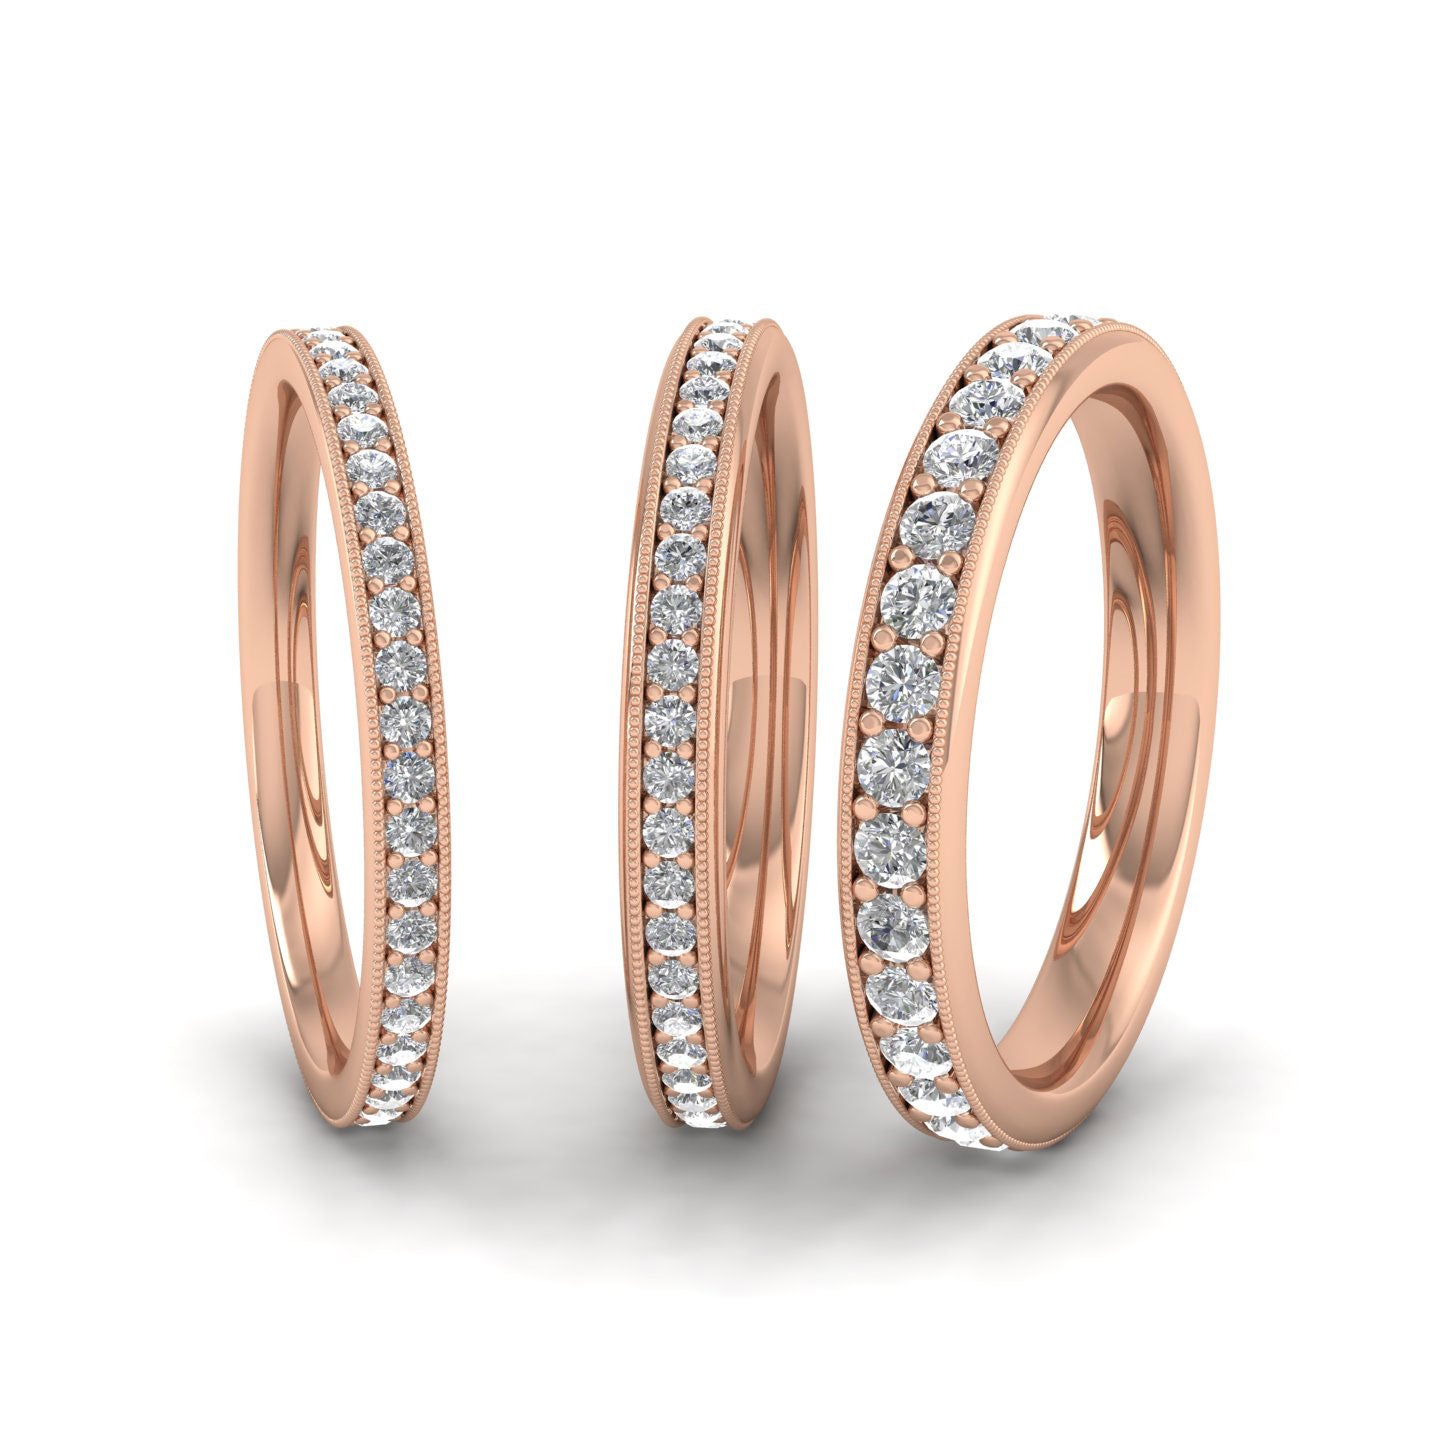 Full Bead Set 0.8ct Round Brilliant Cut Diamond With Millgrain Surround 9ct Rose Gold 3mm Wedding Ring